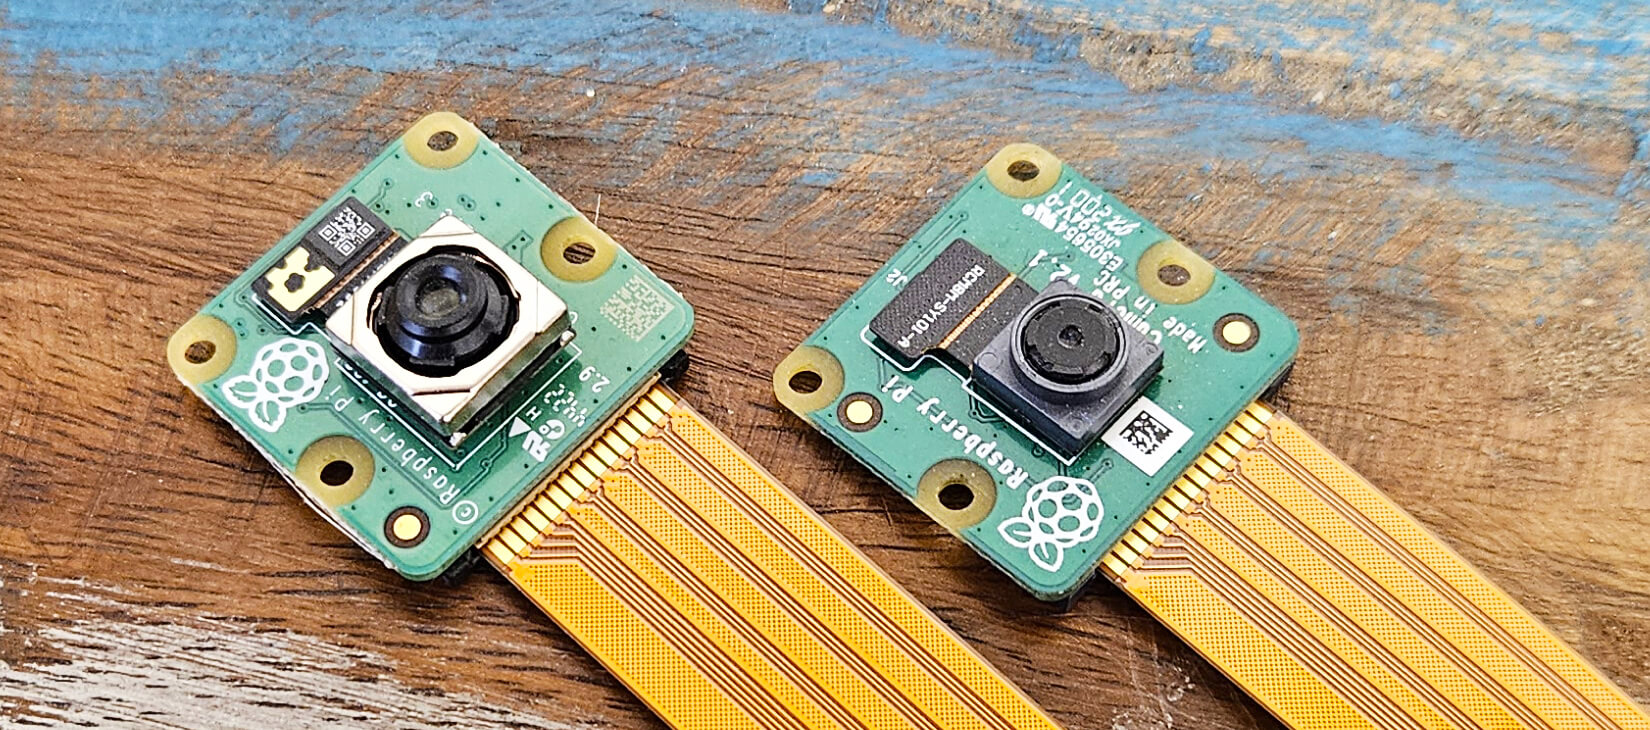 Official Raspberry Pi camera modules